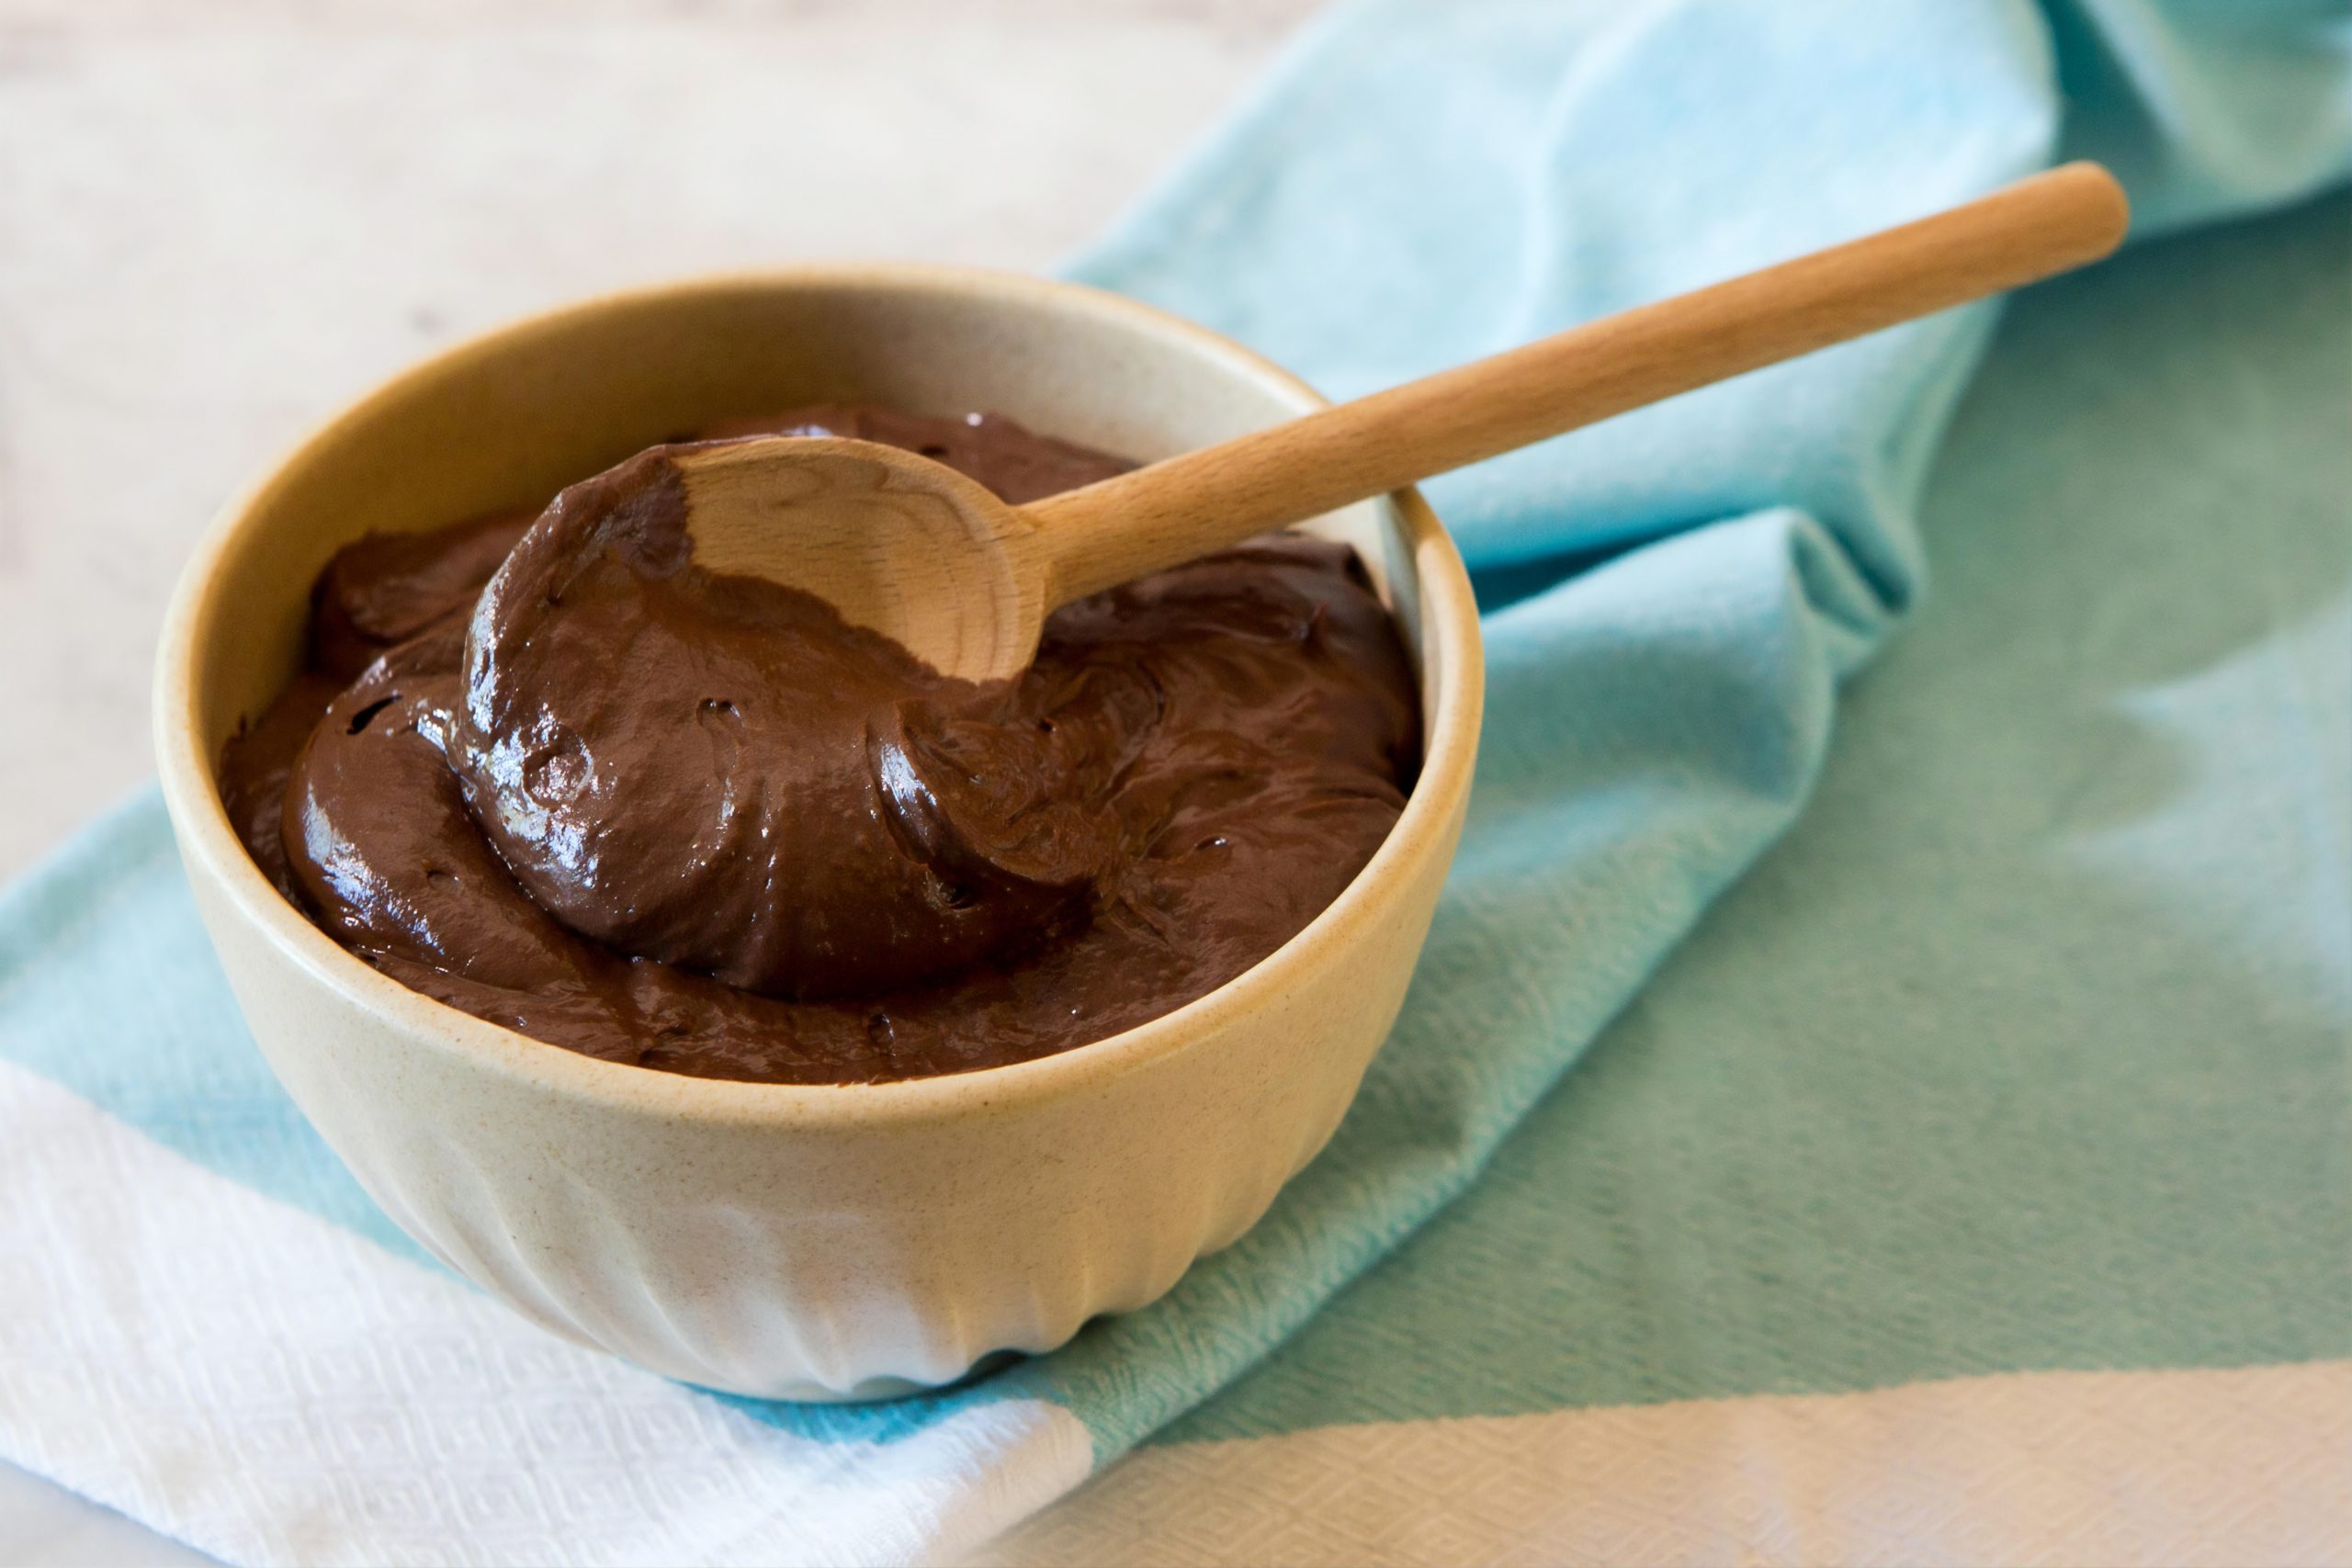 Avocado Chocolate Mousse Recipe With Cocoa Powder